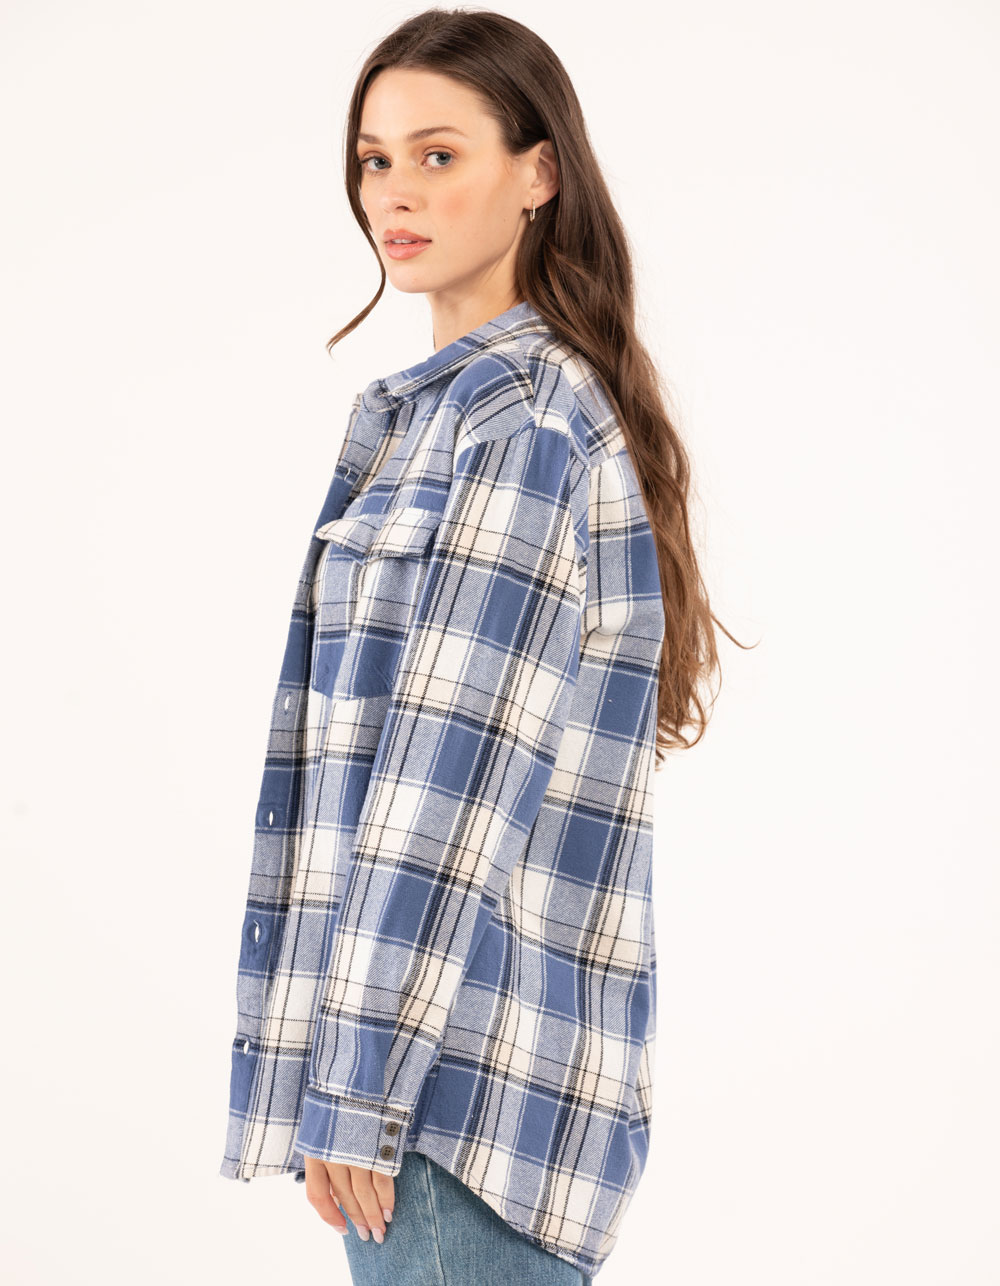 ROXY Let It Go Womens Flannel Shirt - BLUE COMBO | Tillys